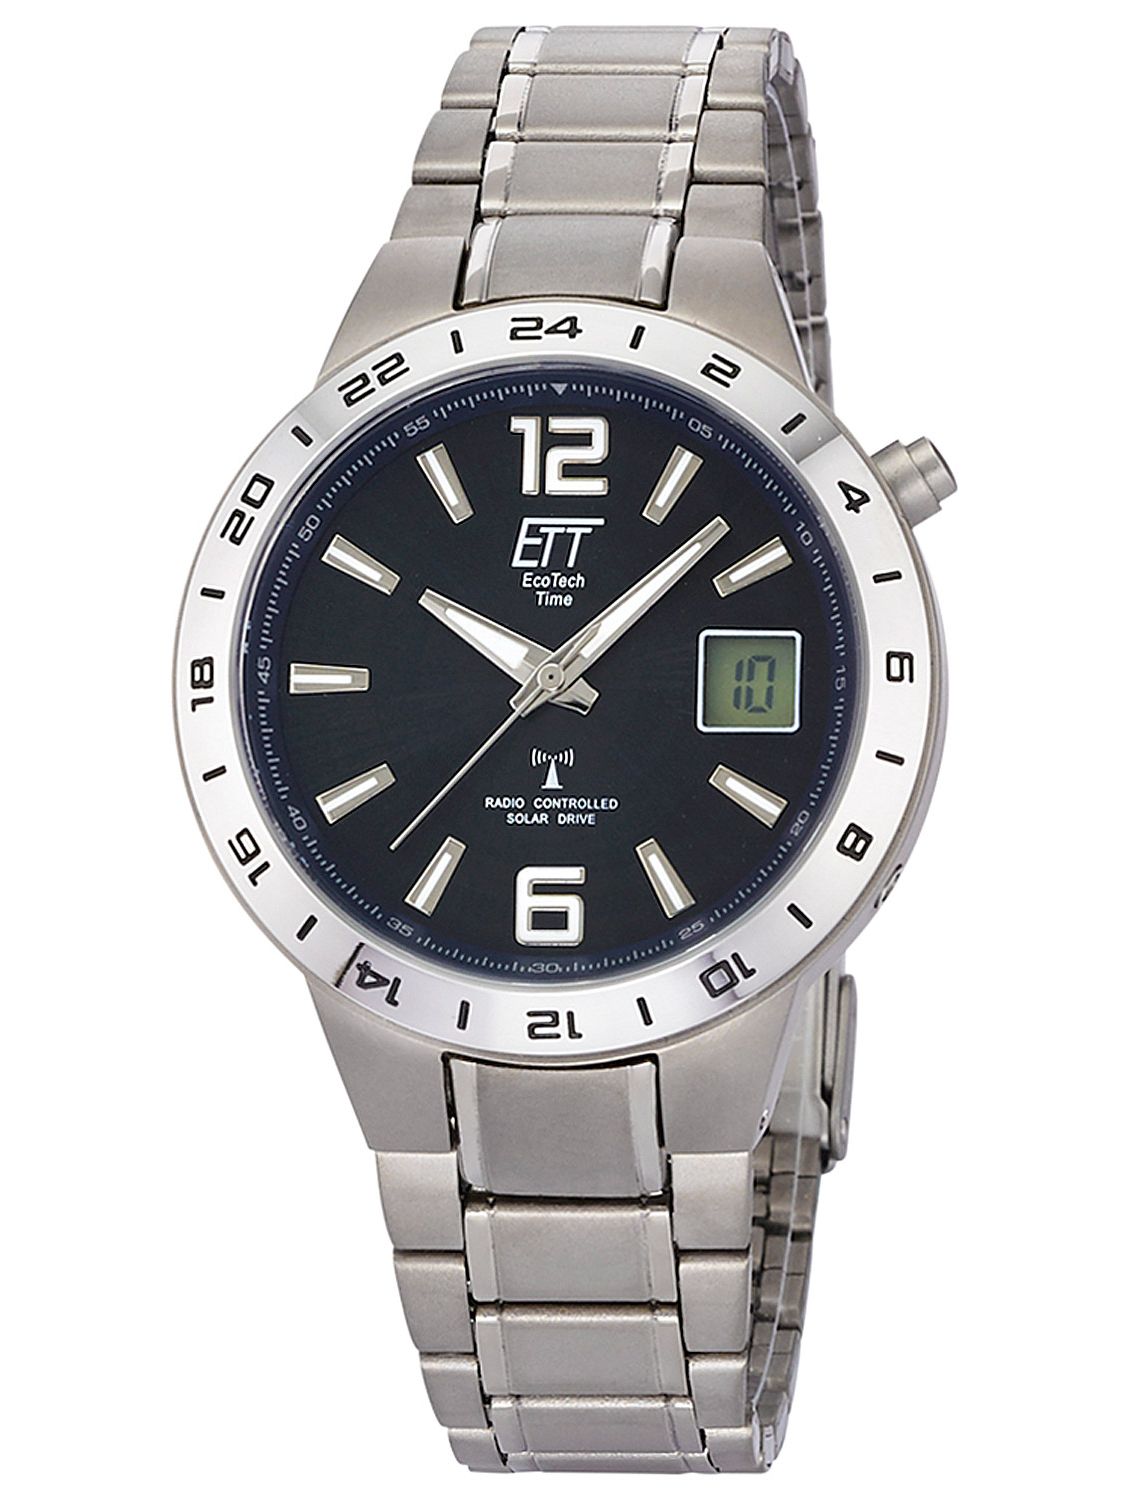 ETT Eco Tech Time Radio-Controlled Solar • Watch uhrcenter EGT-11411-41M Titanium